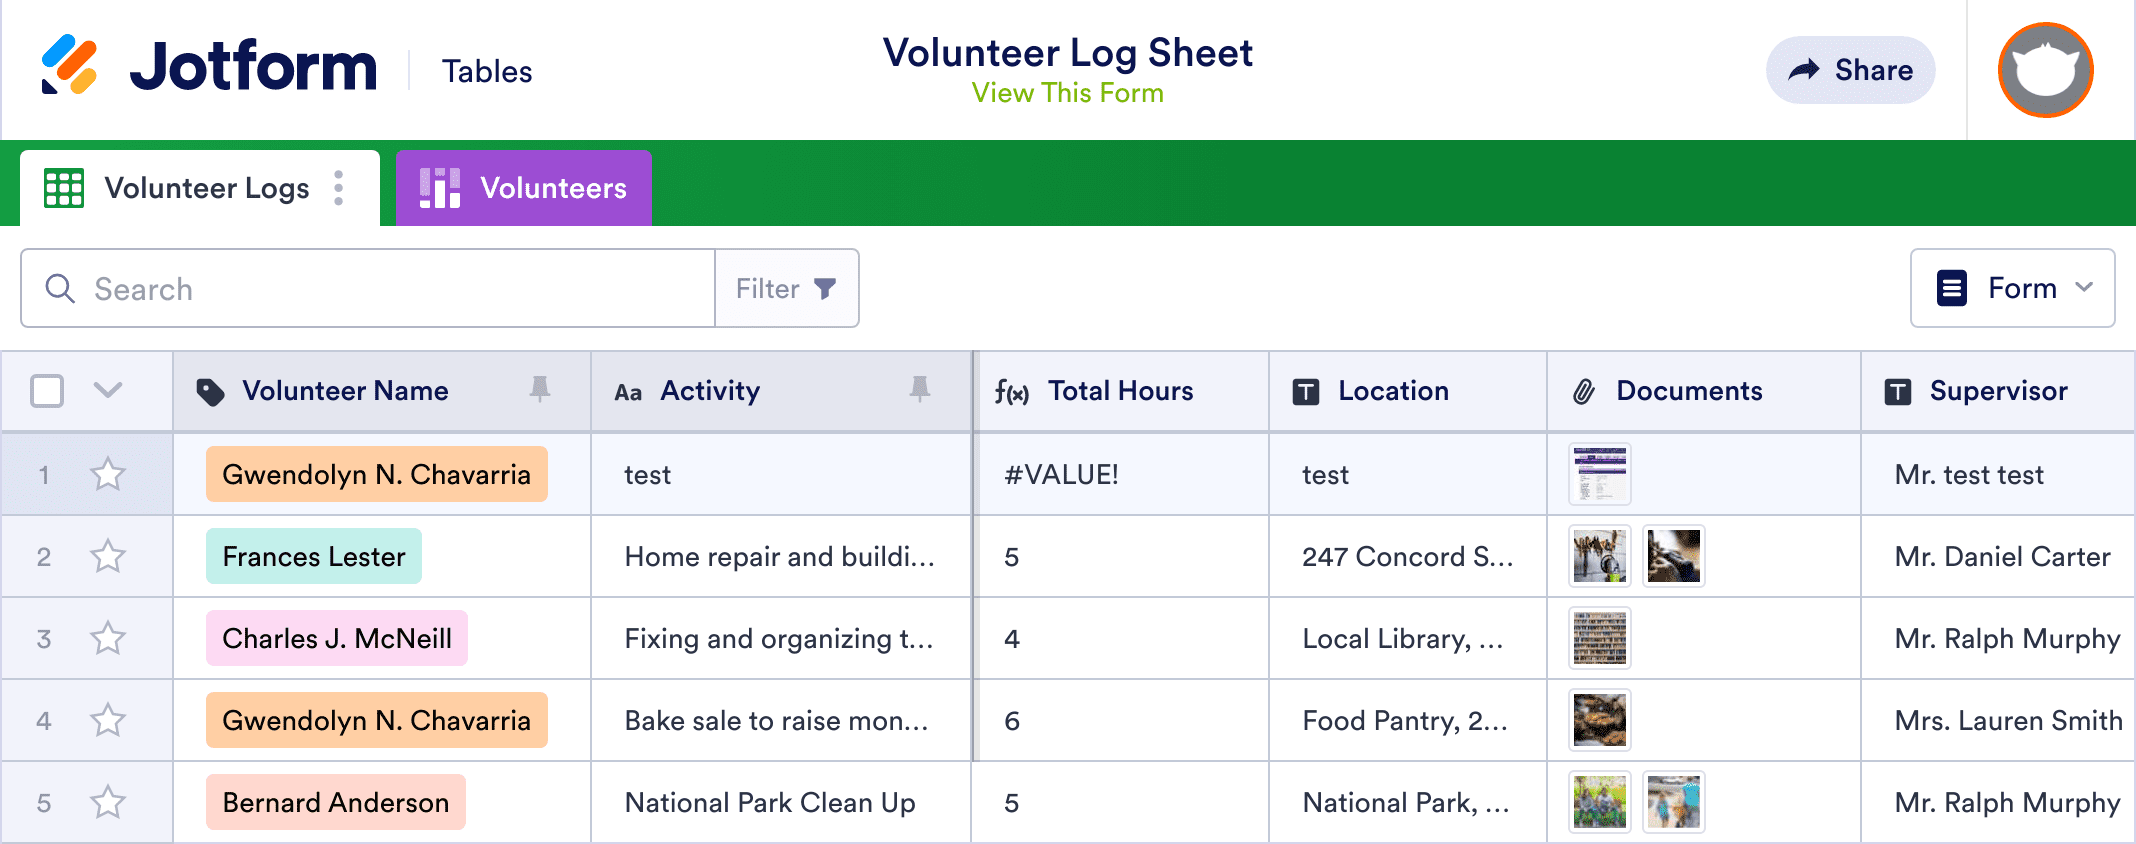 Volunteer Log Sheet Template | Jotform Tables